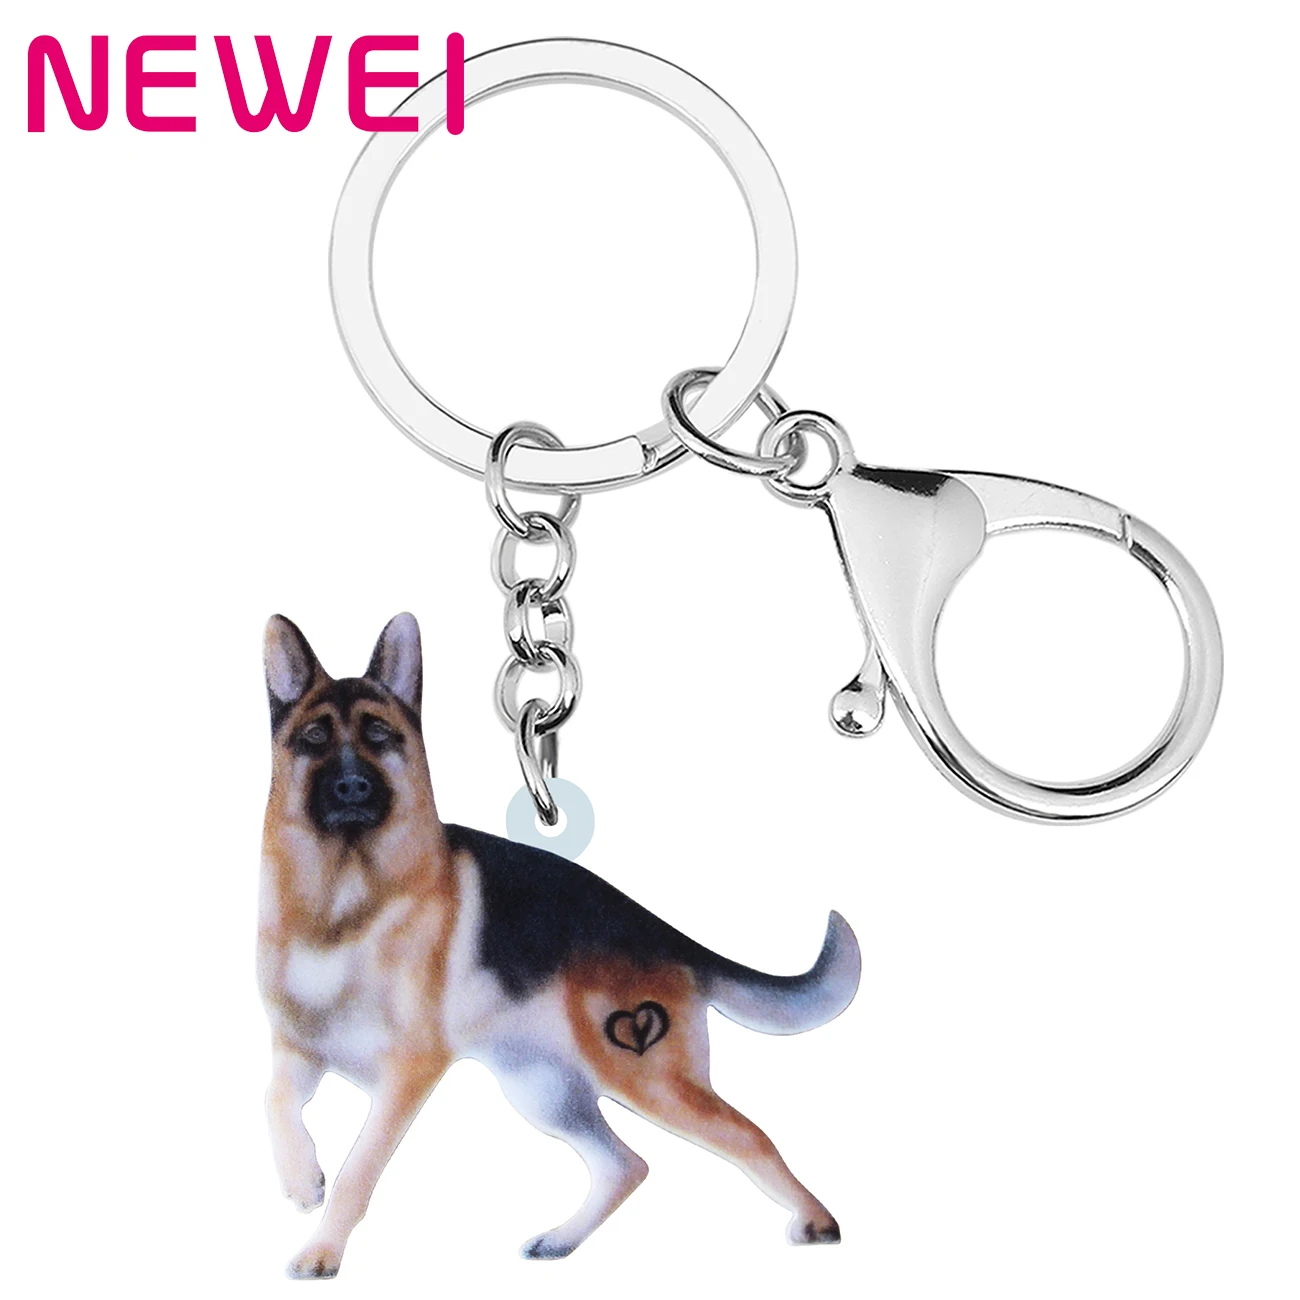 

Acrylic Cute German Shepherd Dog Keychains Car Purse Key Ring Chain Gifts Fashion Jewelry for Women Girls Teens Pets Accessories, Black